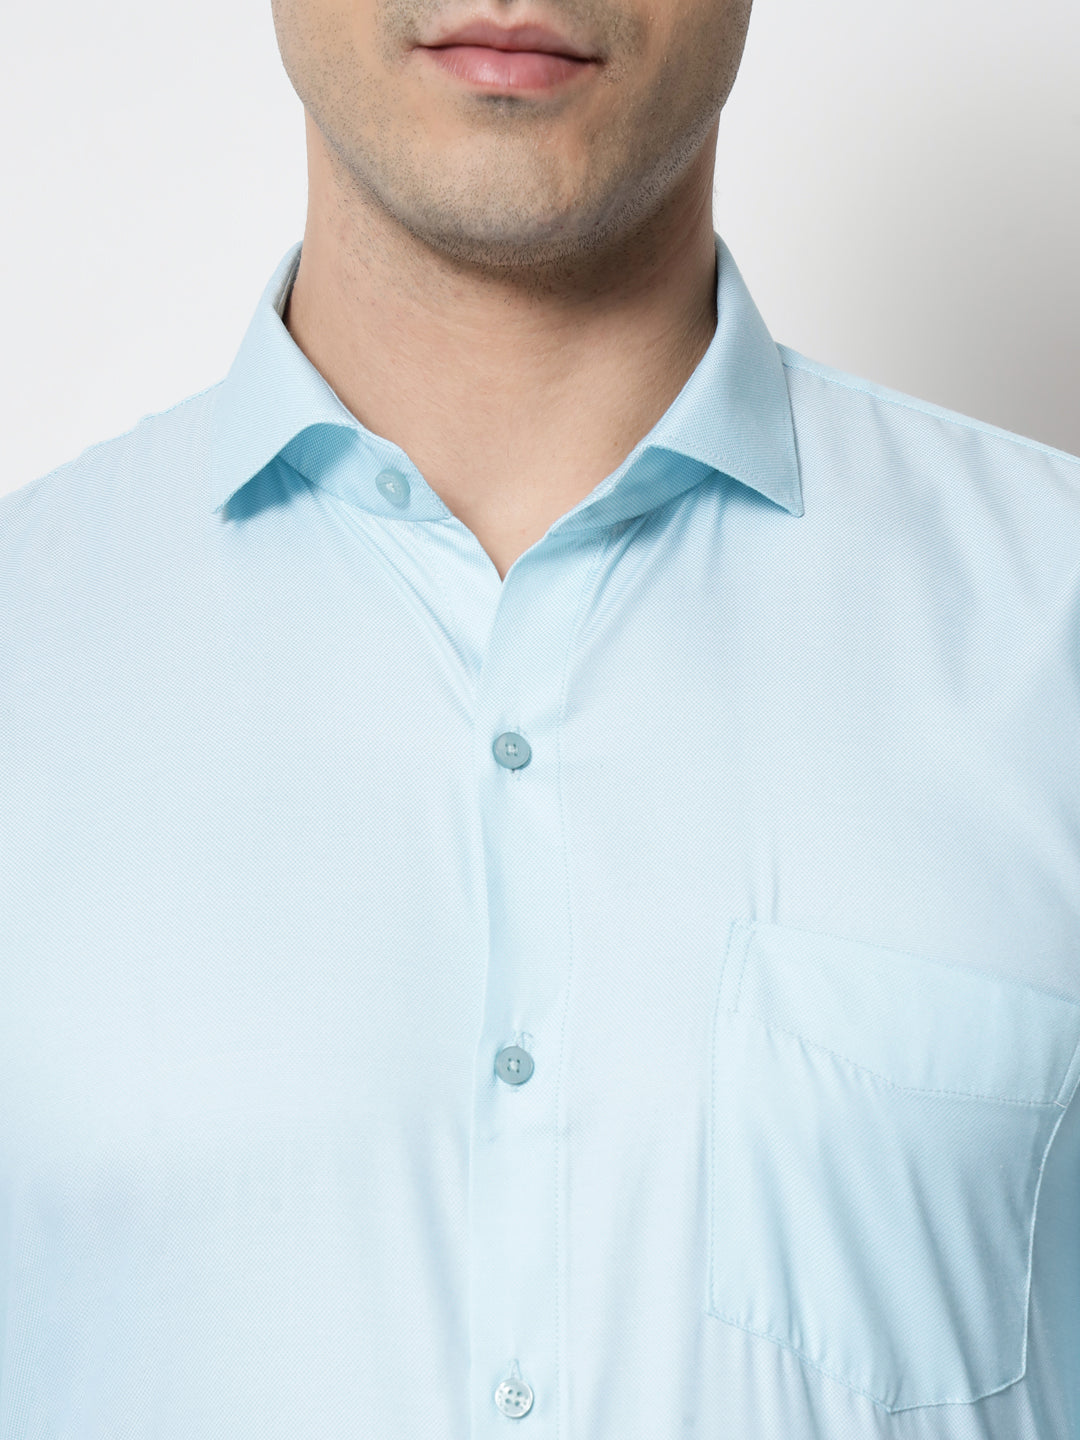 Black and White Shirts Turquoise Dobby Shirt